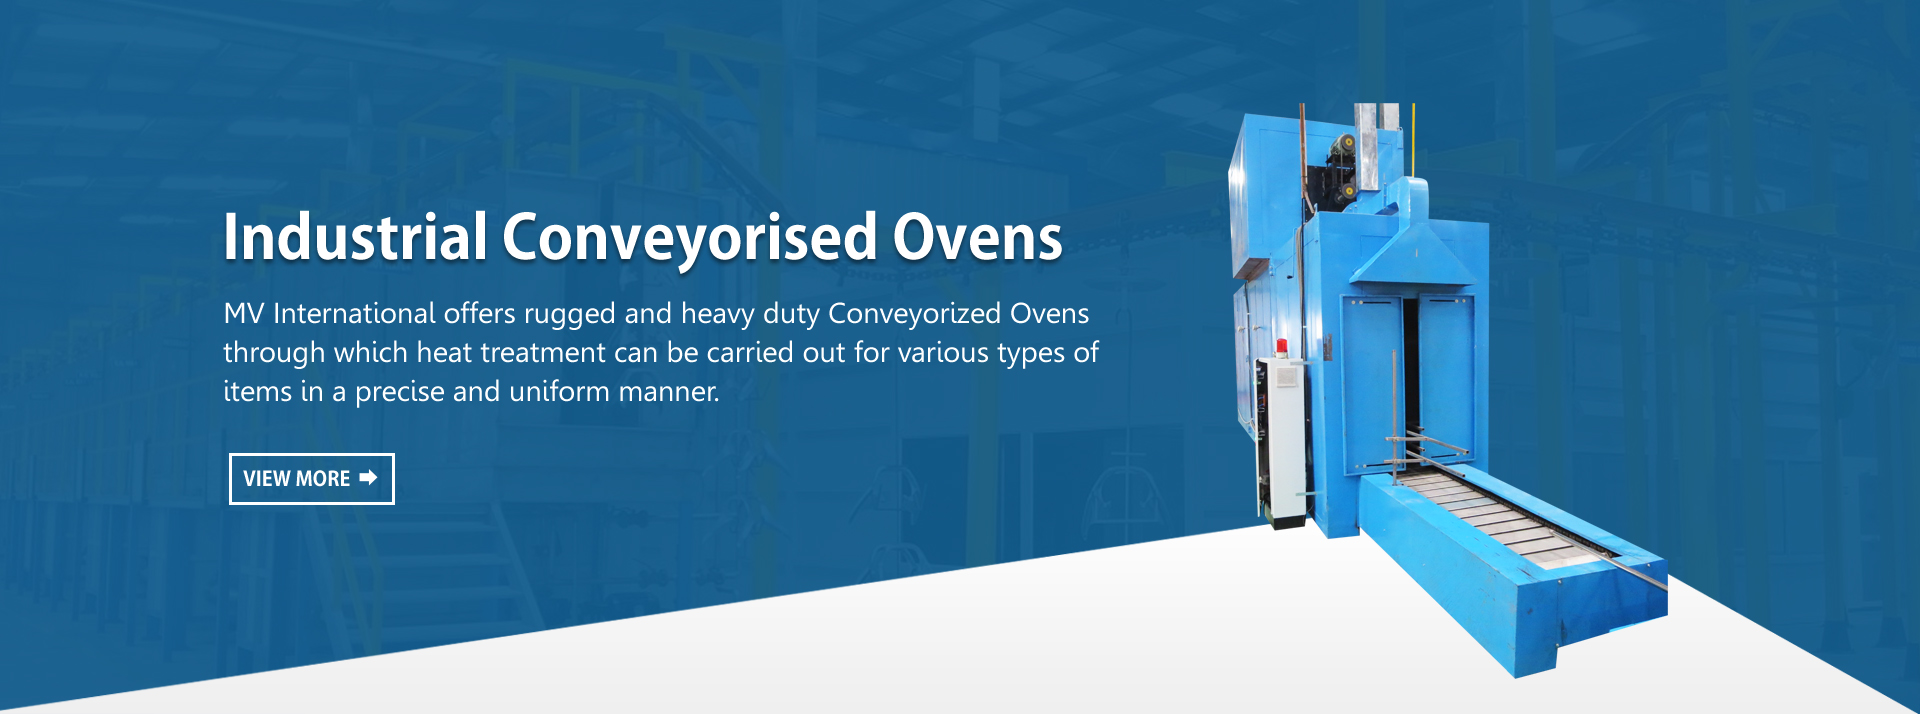 industrial conveyorised ovens